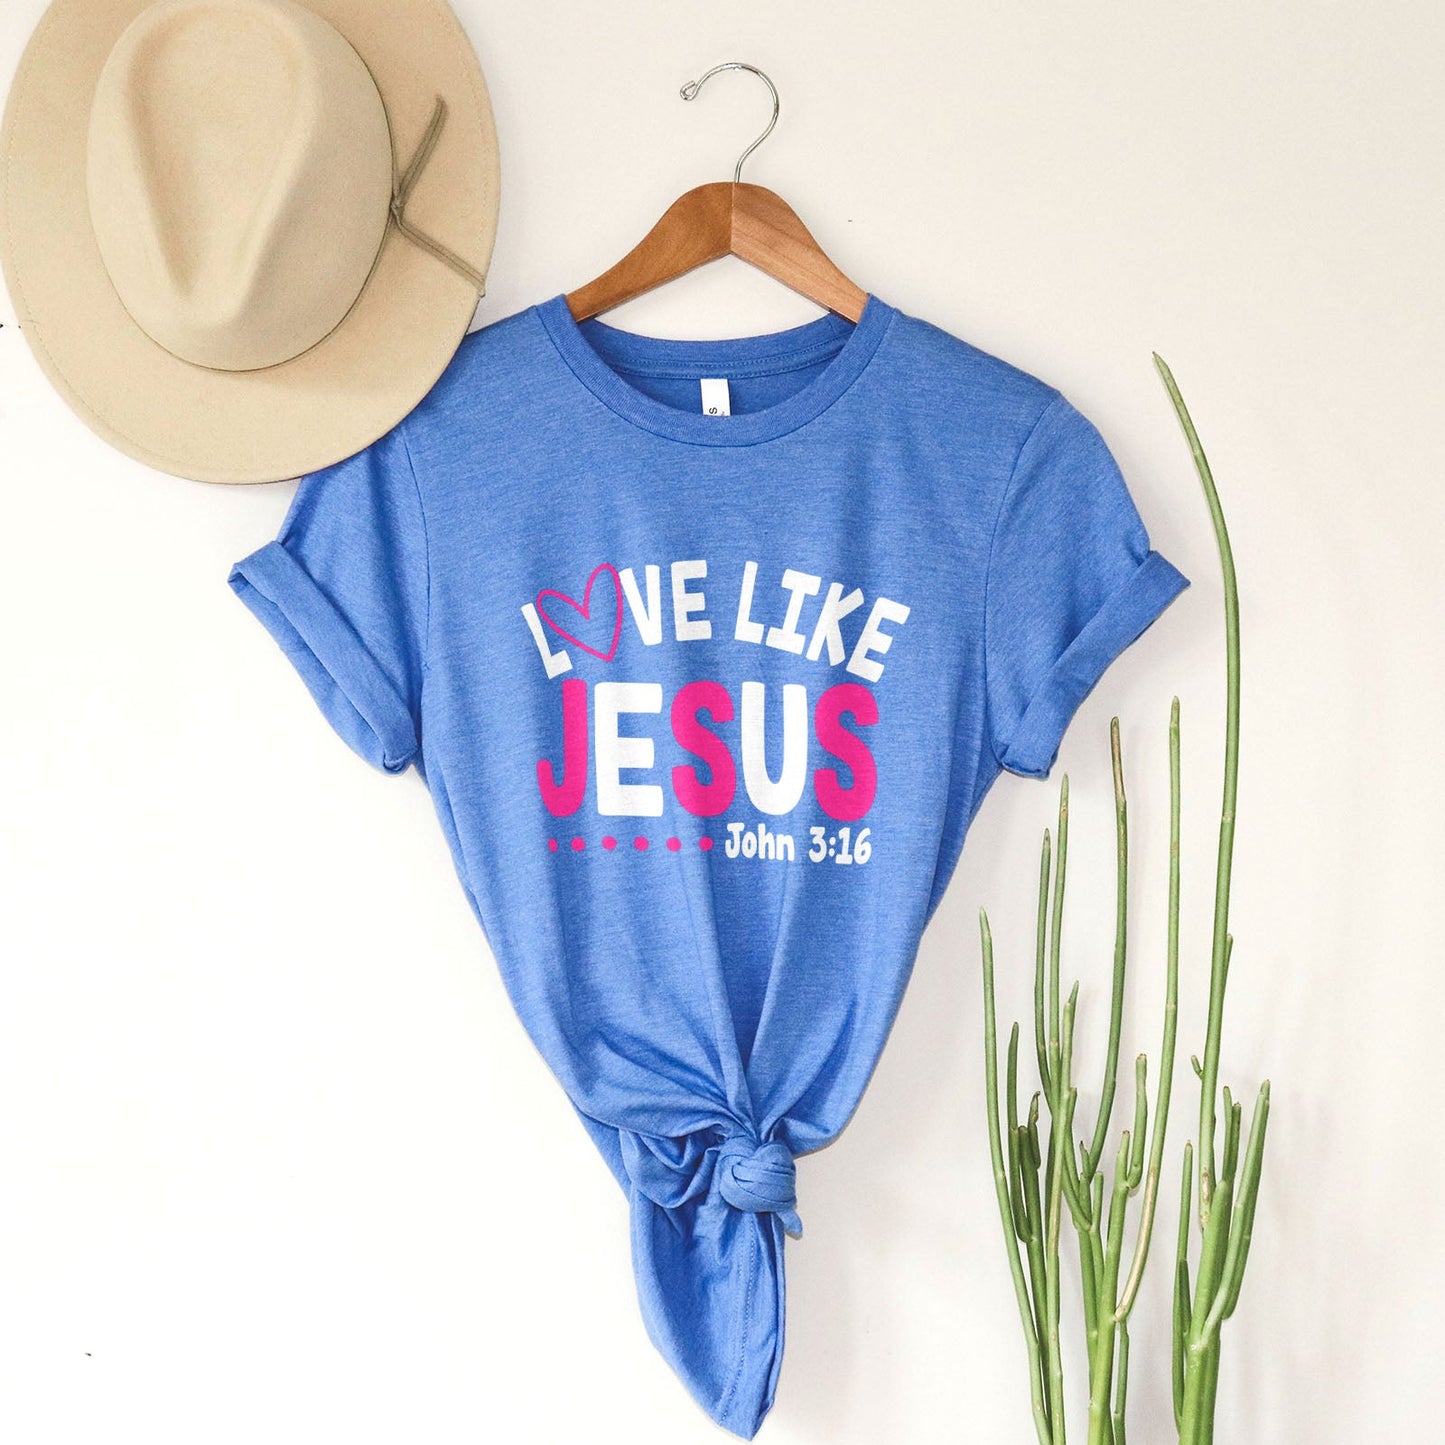 Love Like Jesus John 3:16 Tee Shirts For Women - Christian Shirts for Women - Religious Tee Shirts